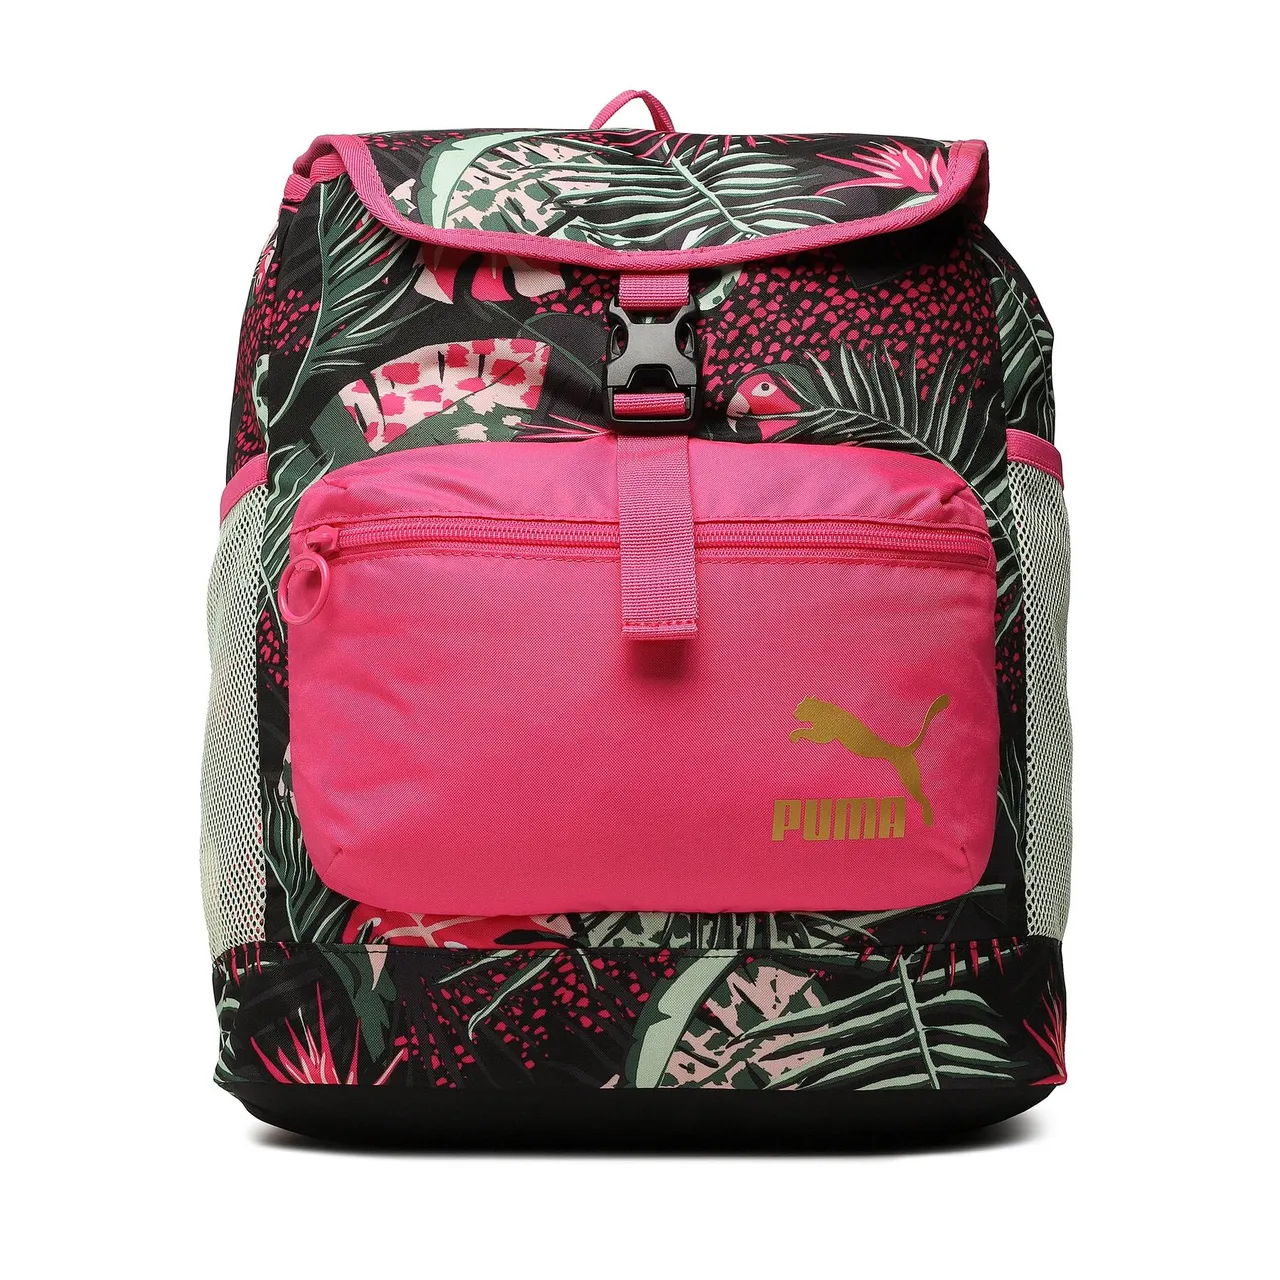 Rucksack Puma Prime Vacay Queen Backpack 079507 Glowing Pink-Black 01